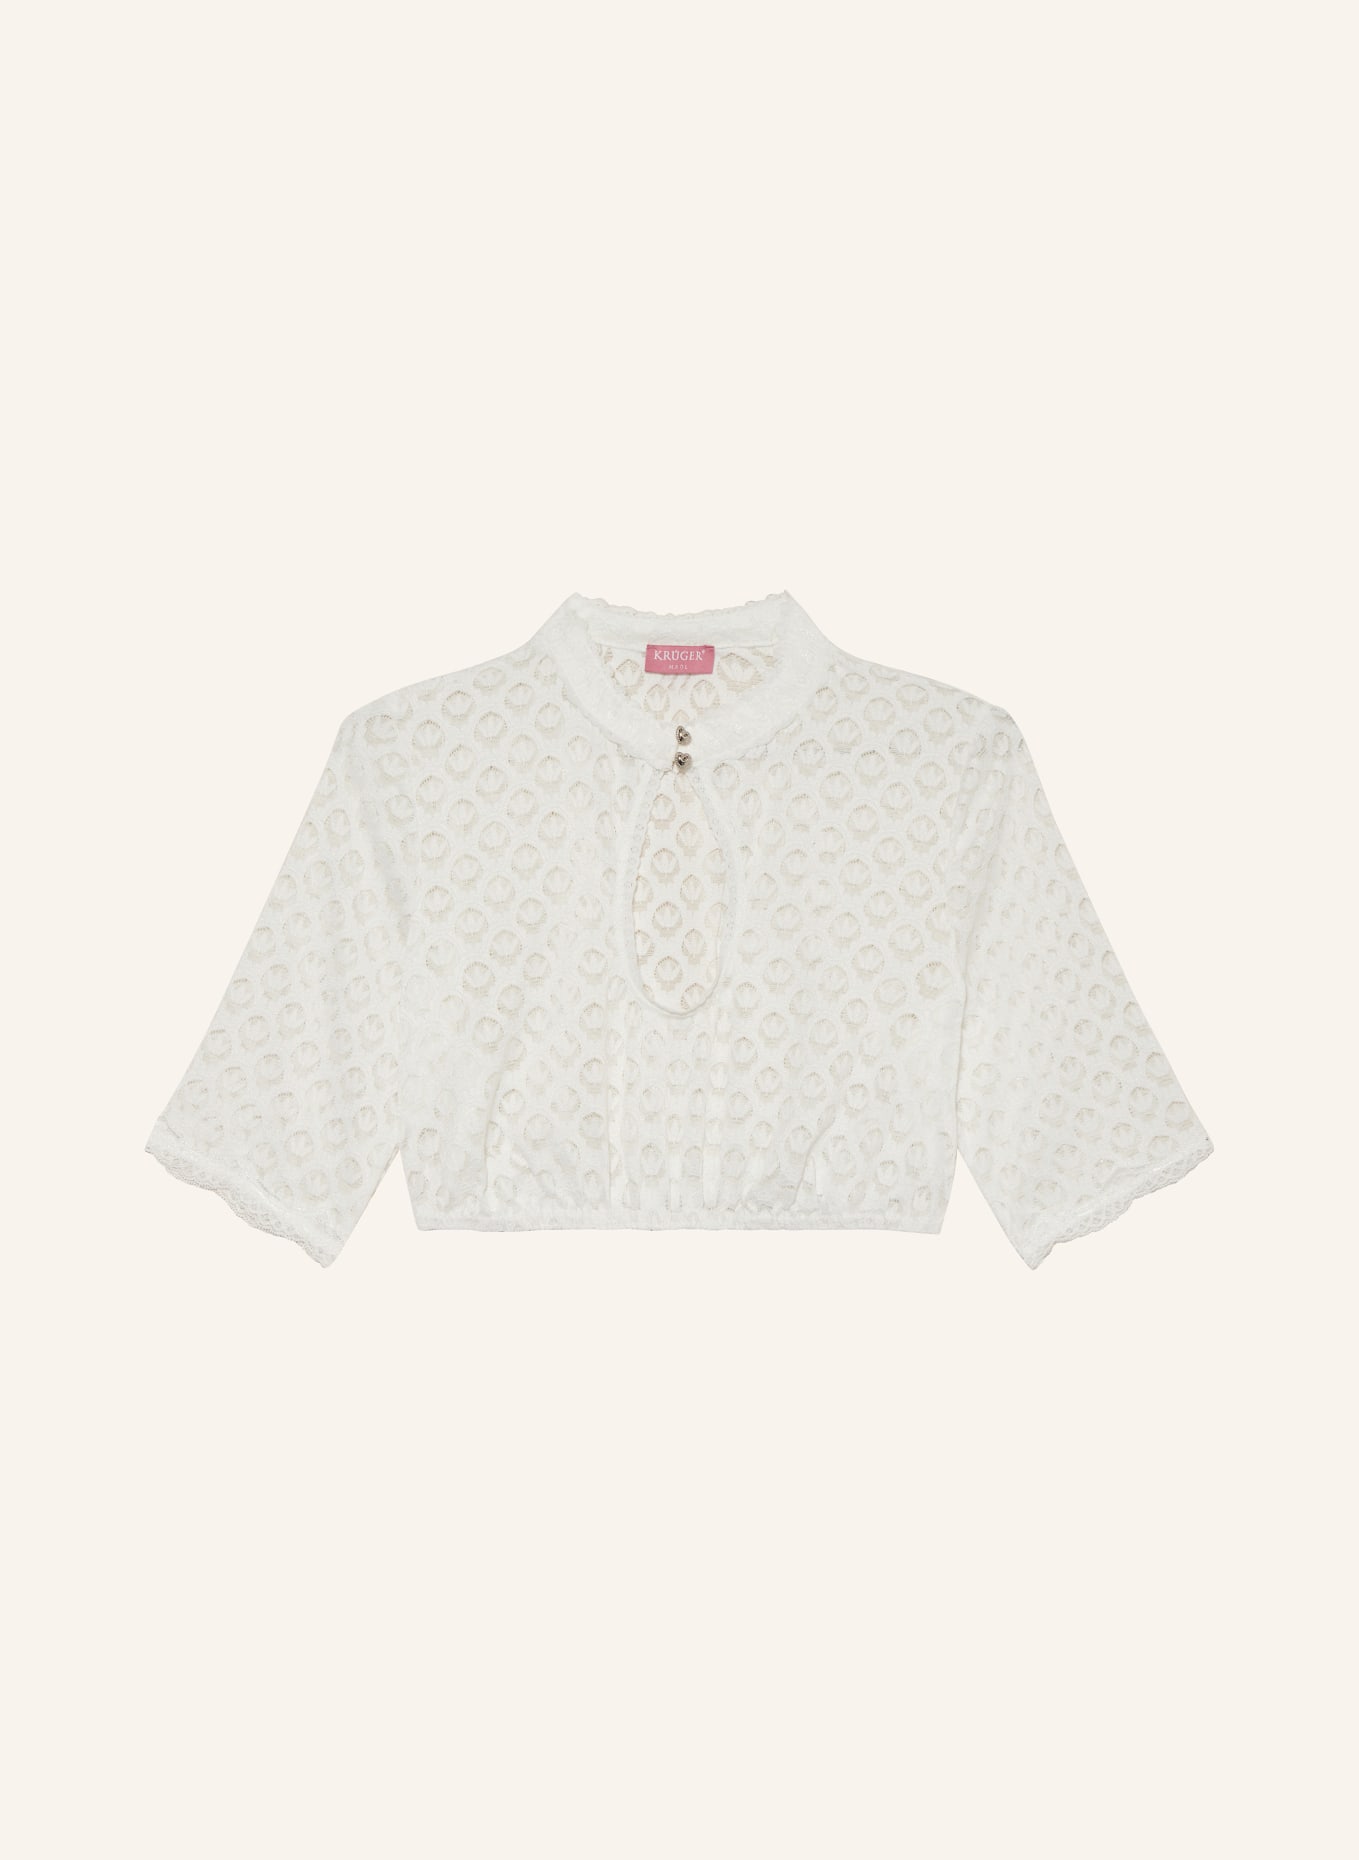 KRÜGER Dirndl blouse made of lace, Color: WHITE (Image 1)